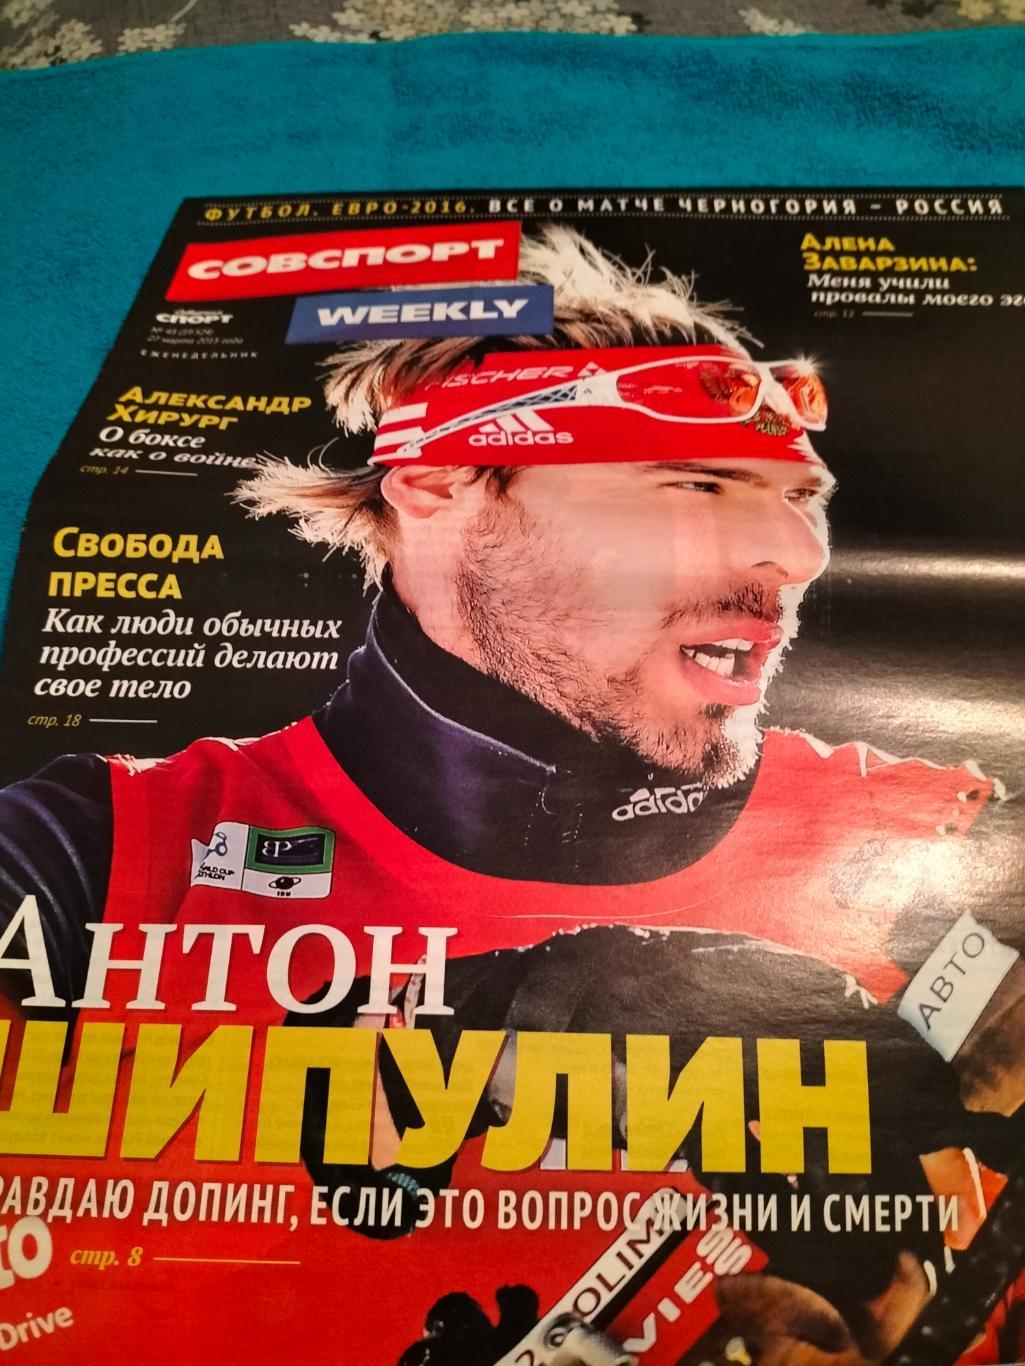 Советский Спорт Weekly №43 2015 год.